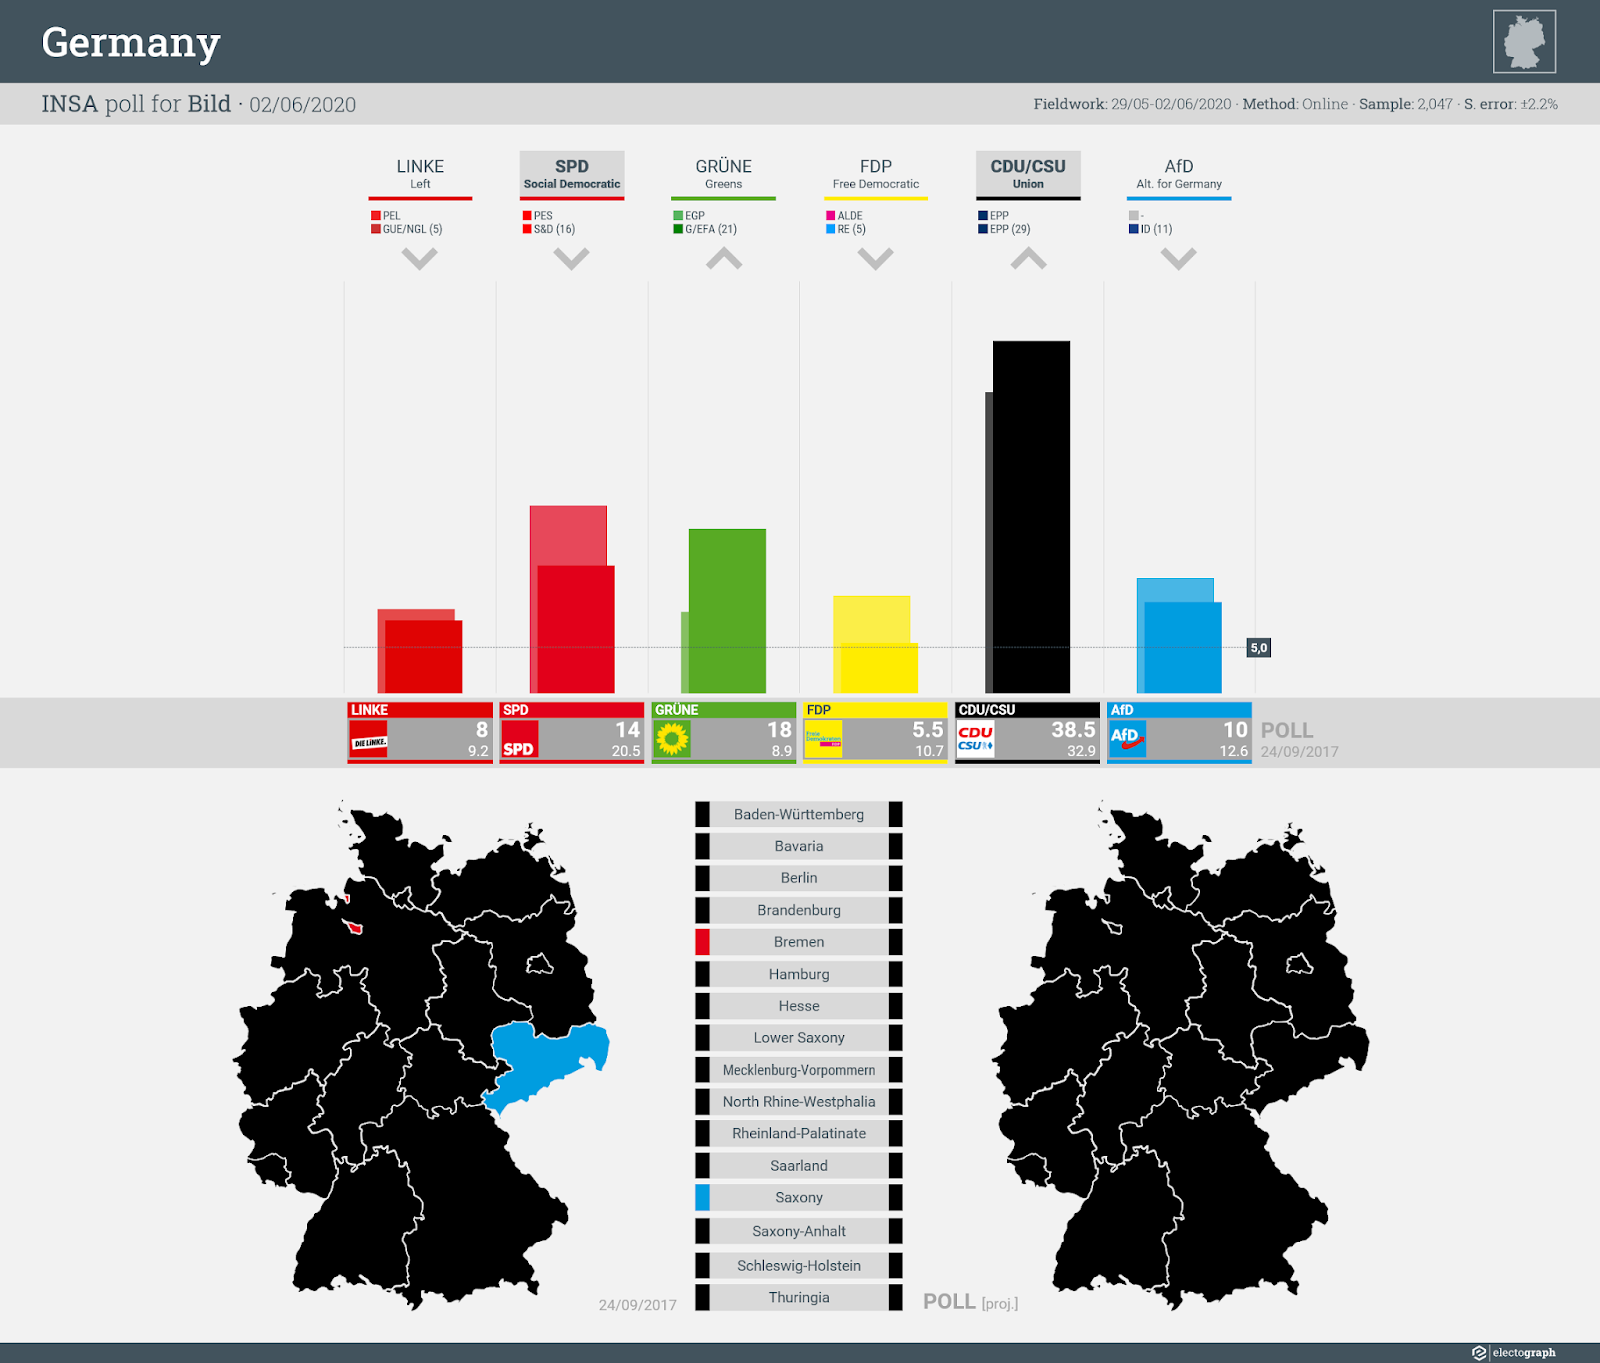 GERMANY: INSA poll chart for Bild, 2 June 2020